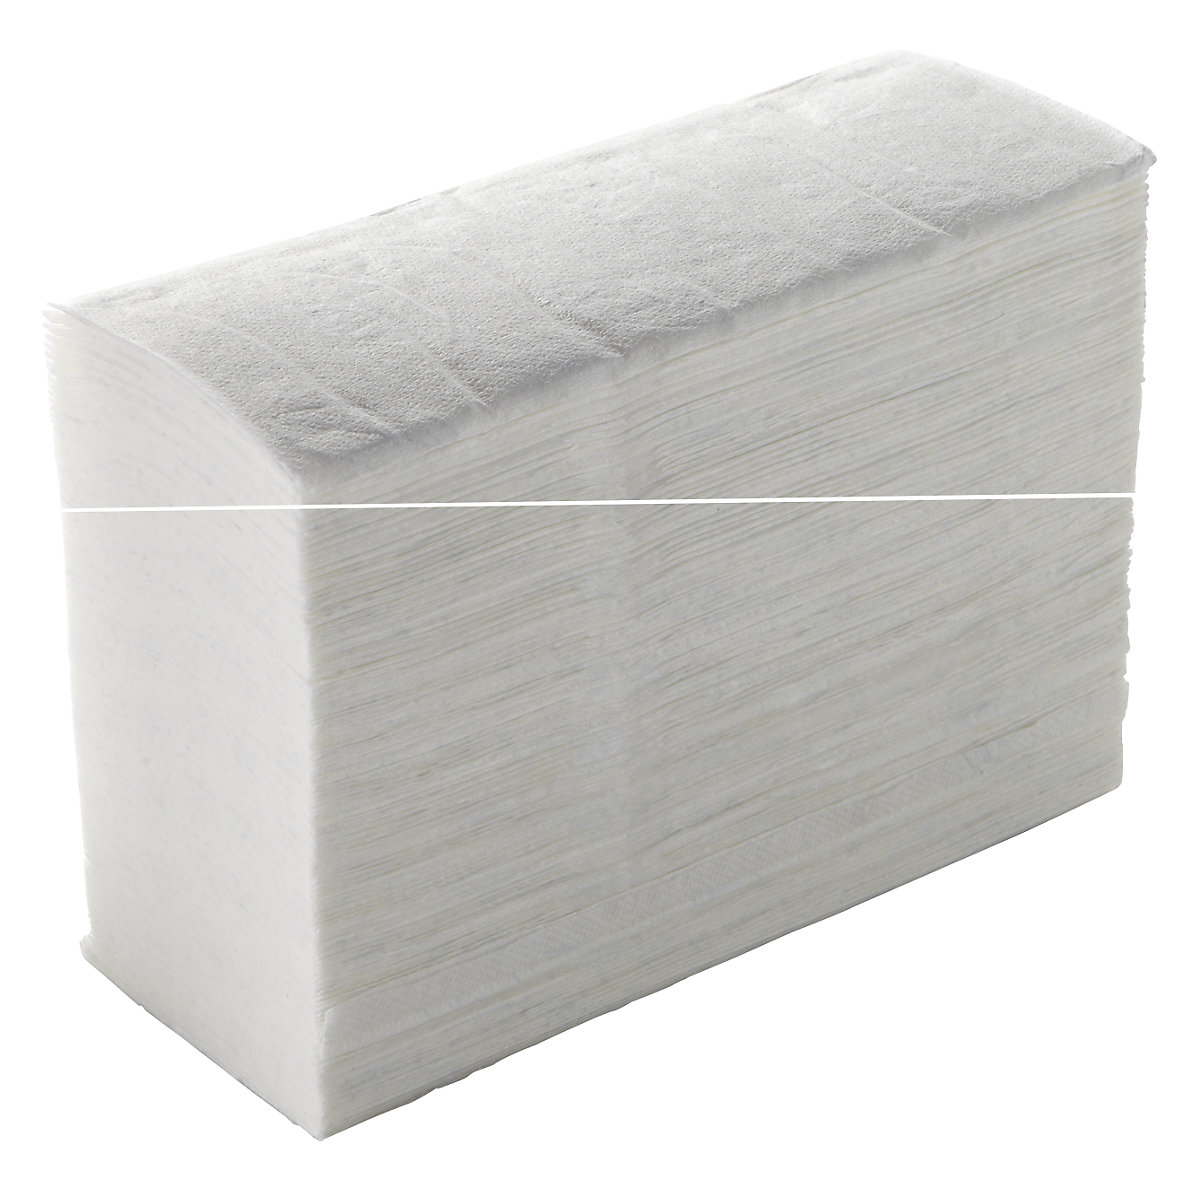 Folded paper towels – TORK (Product illustration 16)-15